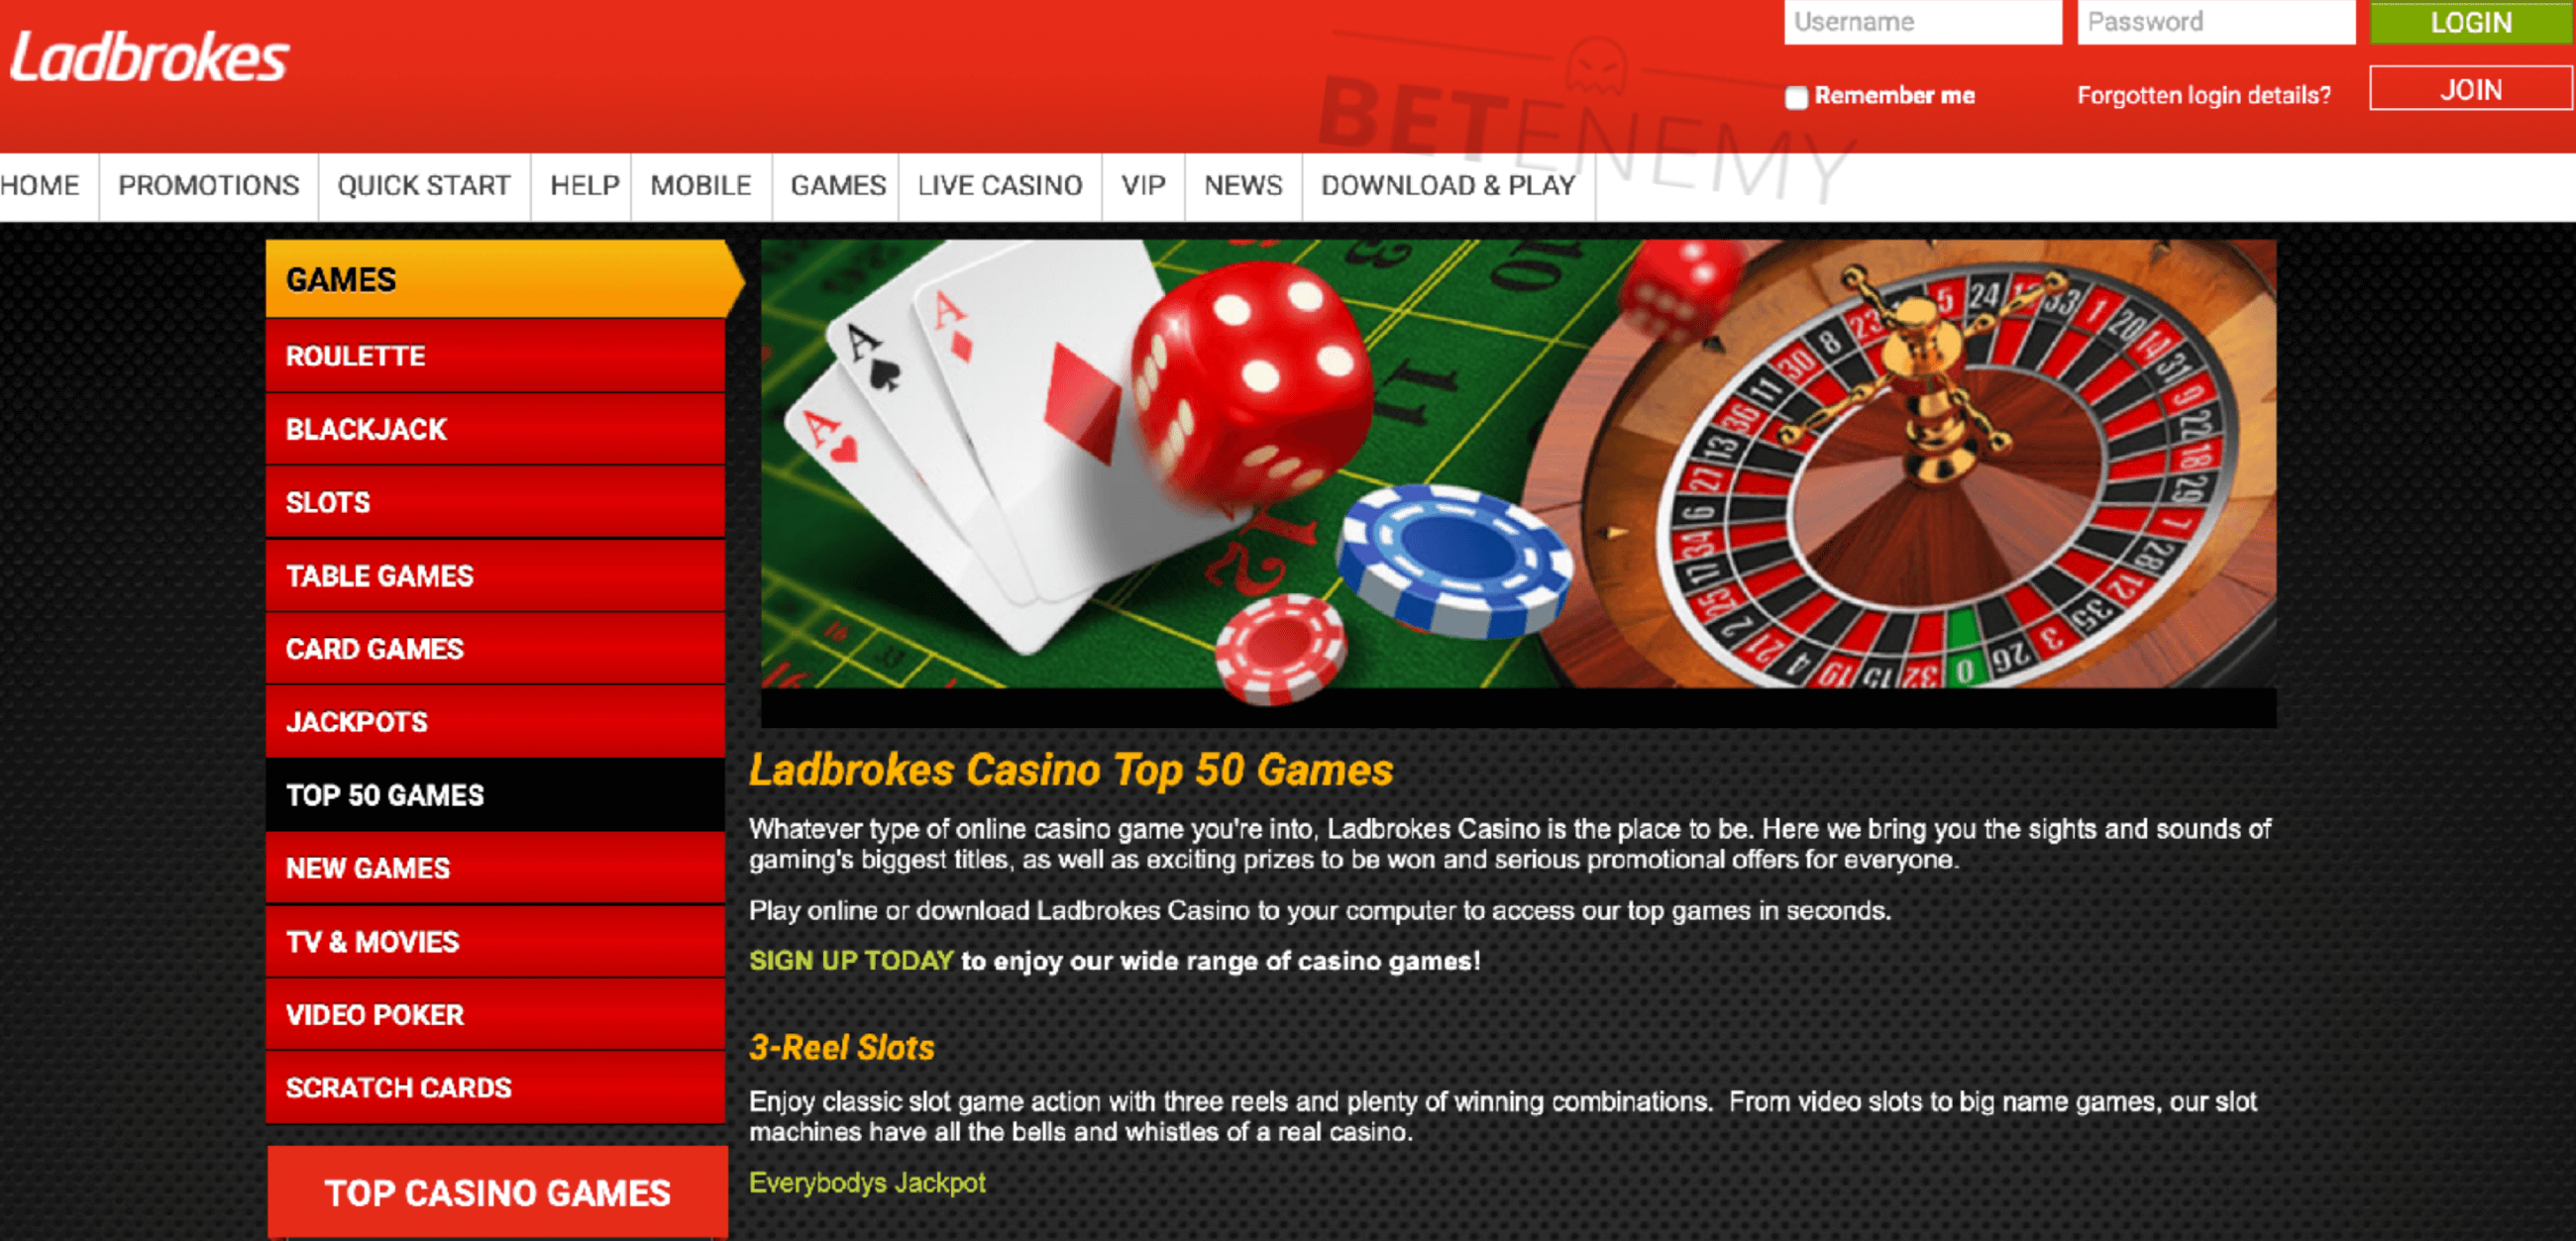 Real online casino games powered by smf fresh casino вход на сайт официальный